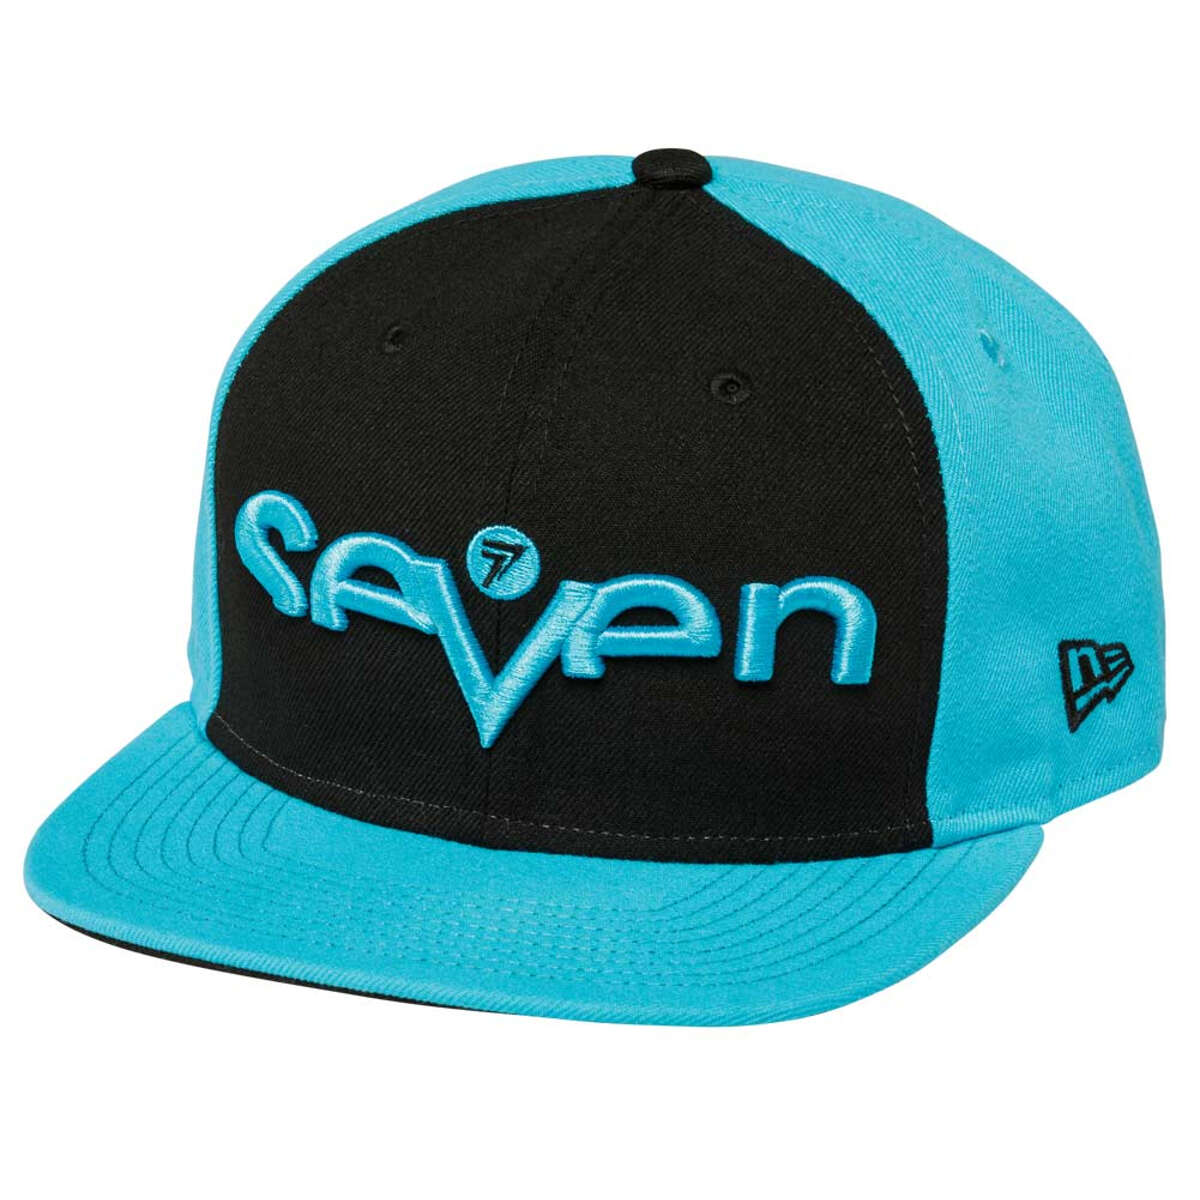 Seven MX Snapback Cap Brand Black/Light Blue